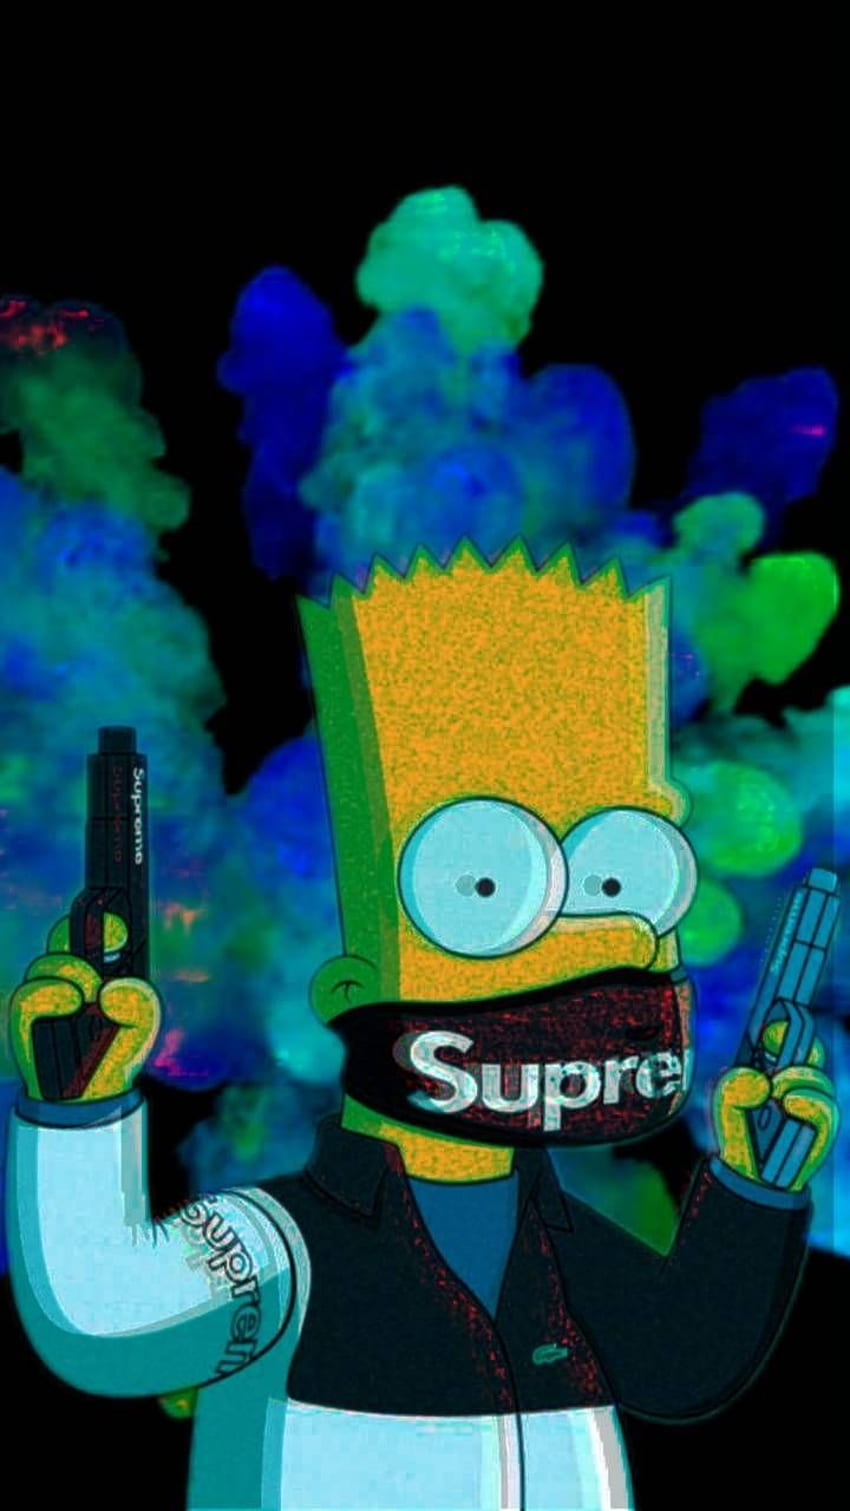 35 ideias de Bart Simpson  papel de parede supreme, fotos dos simpsons,  fotos do bart